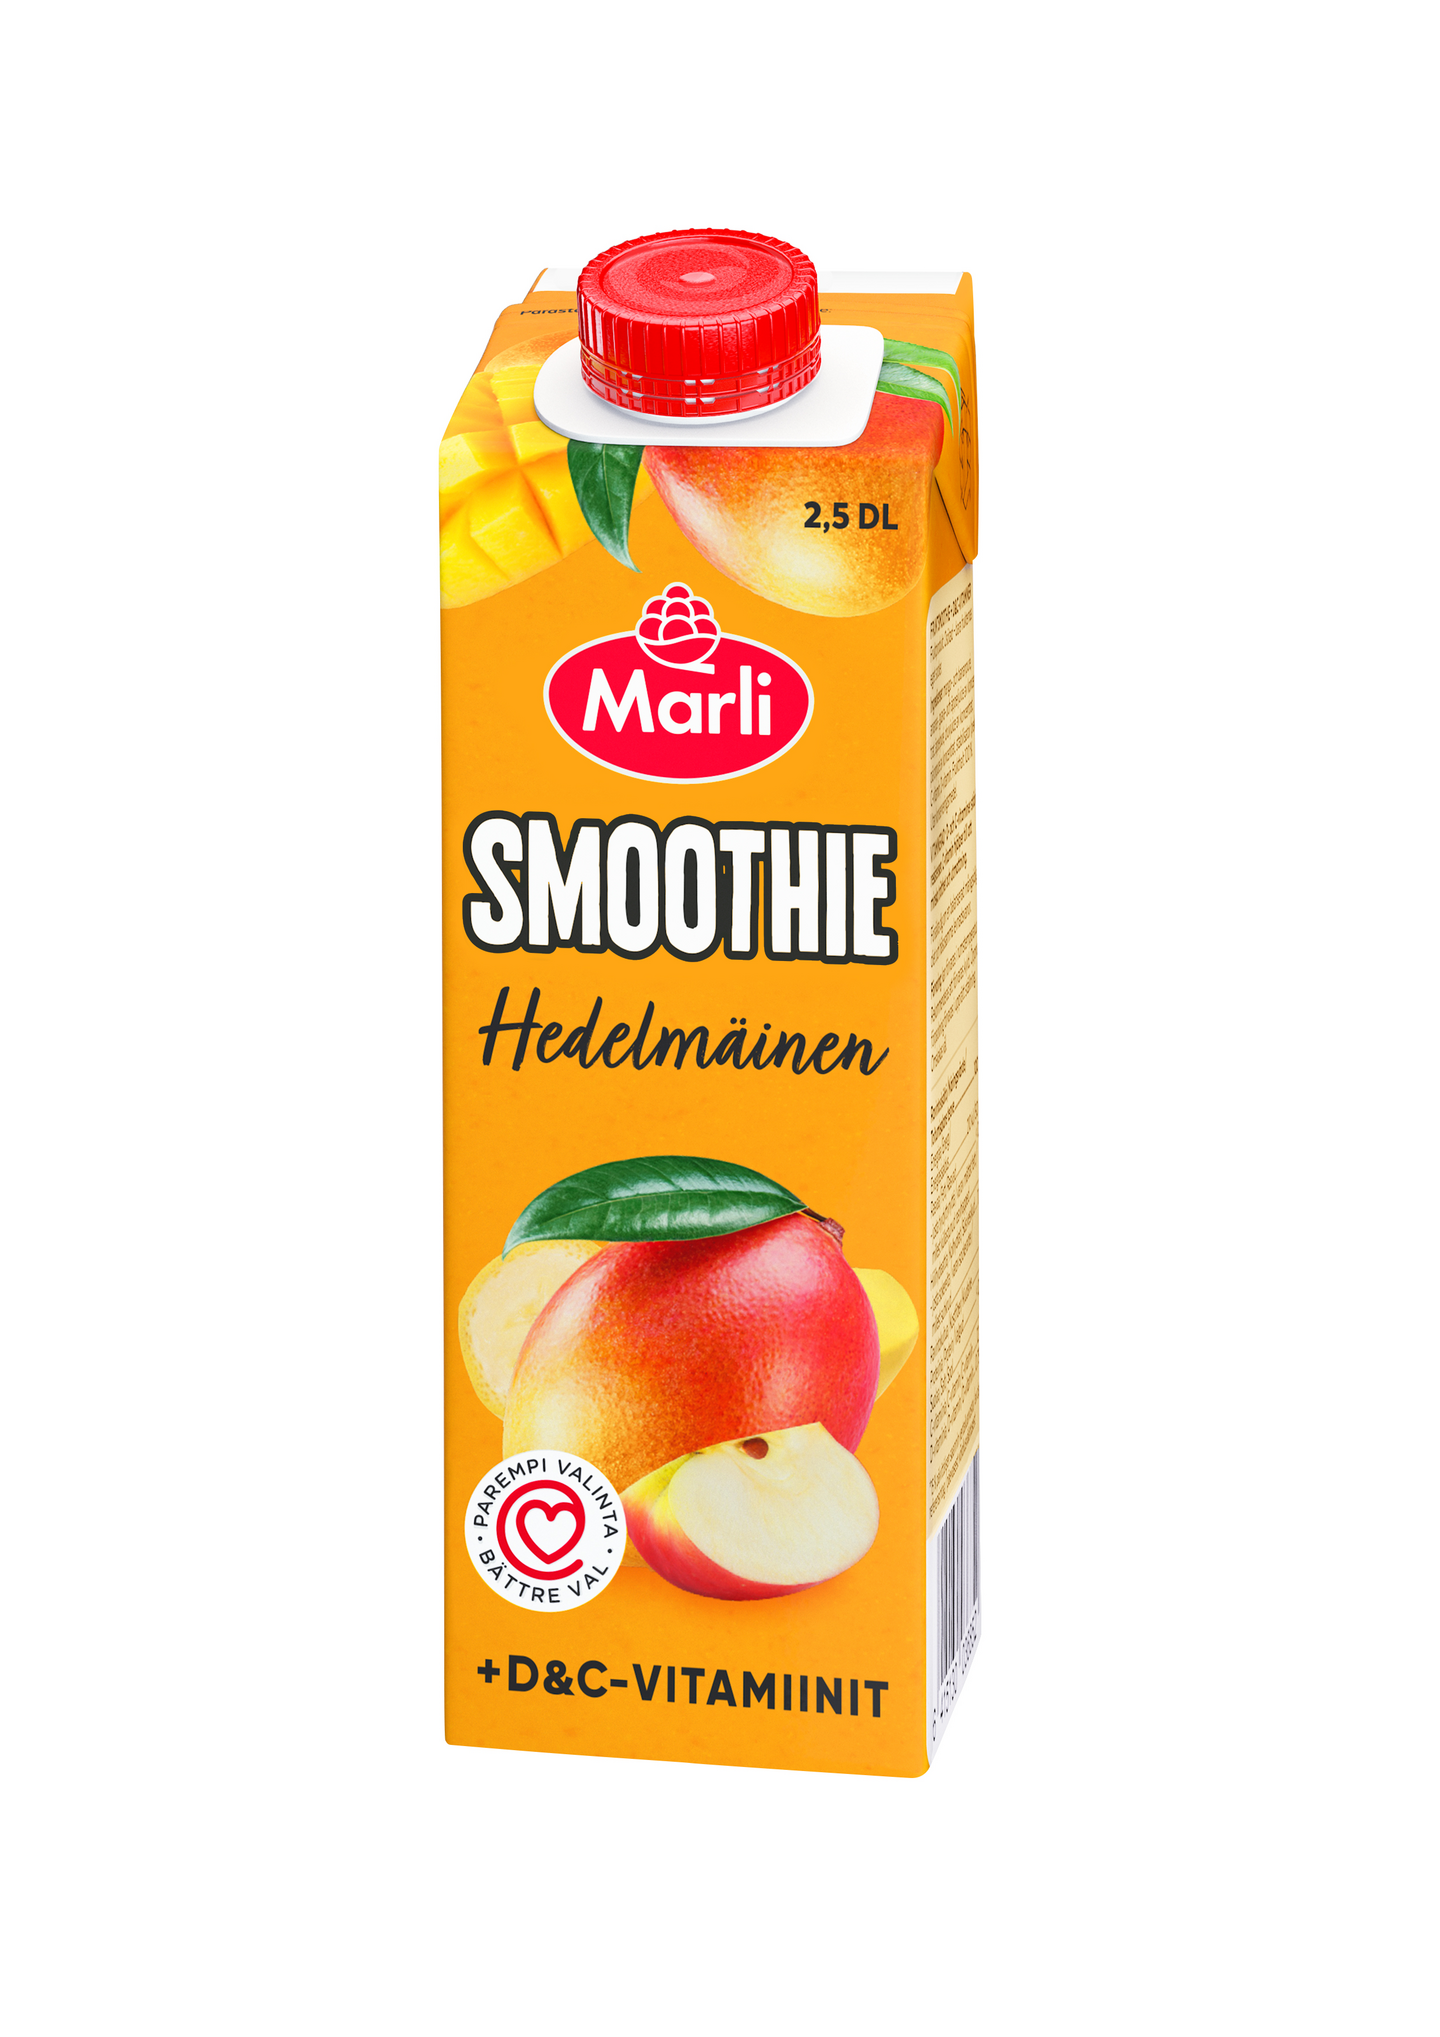 Marli hedelmäinen smoothie + D&C -vitamiinit 2,5dl